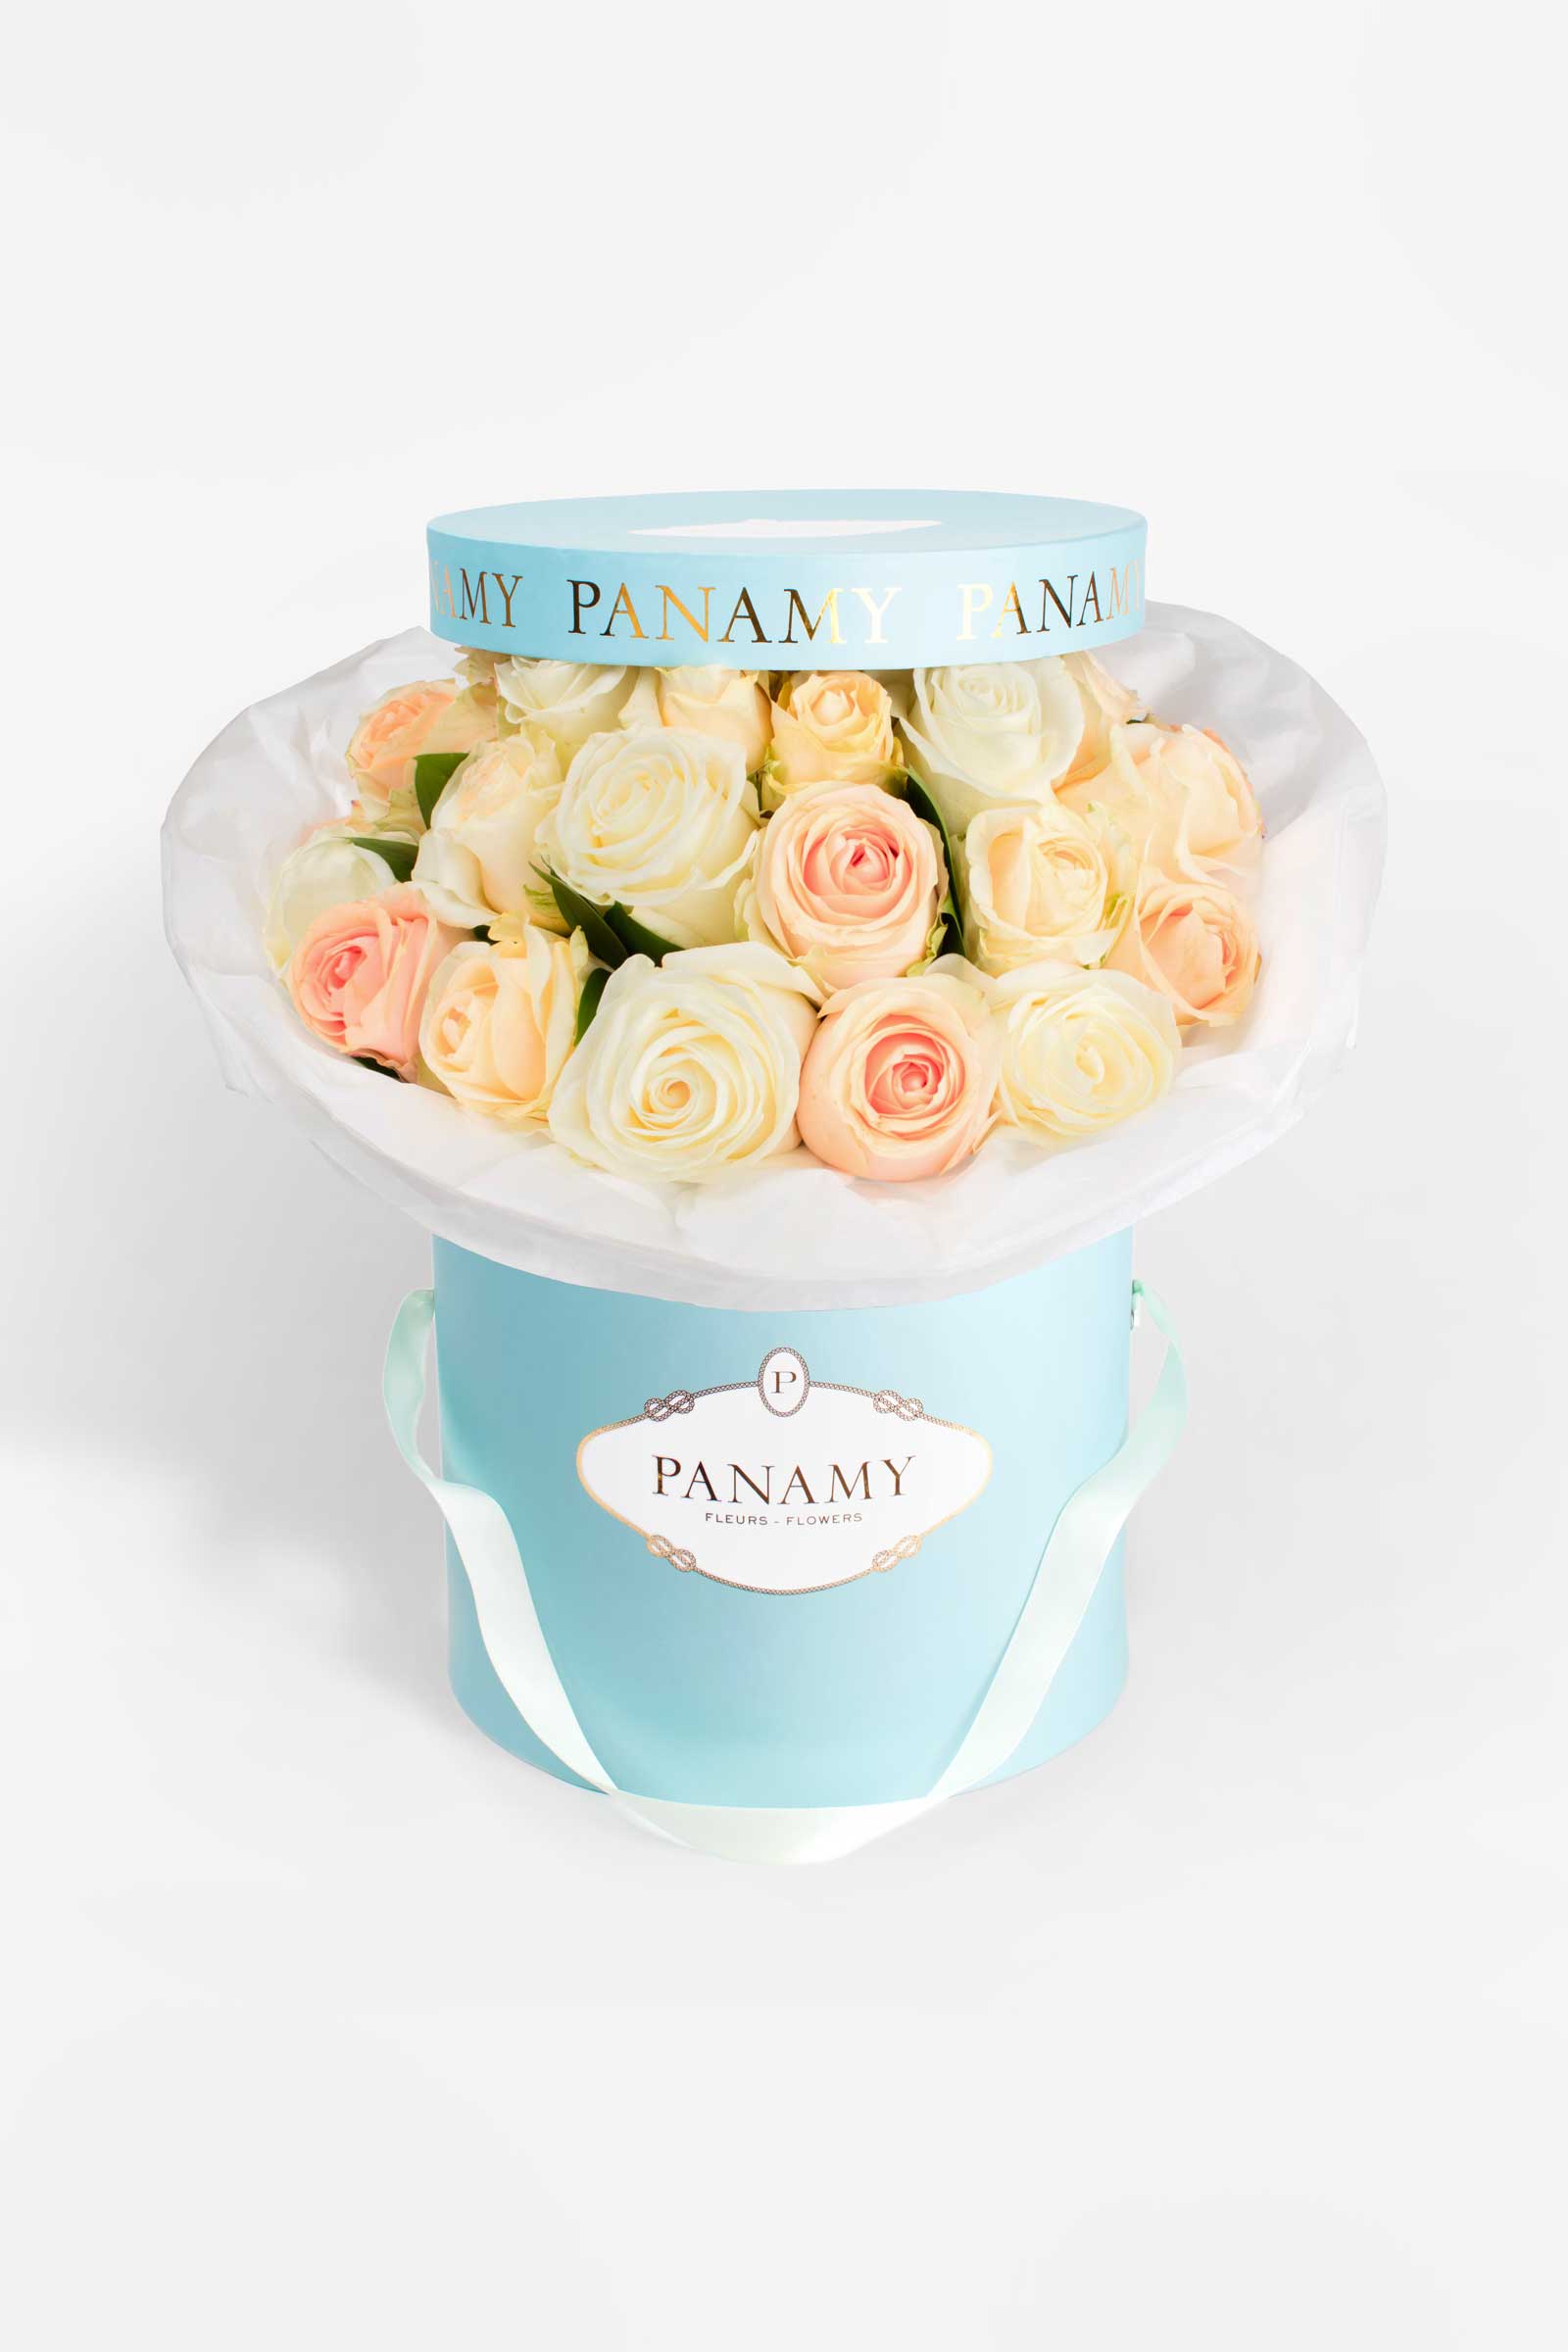 Il Candido - Flower Bouquet - Signature Collection - PANAMY Flower Delivery in Switzerland, Geneva, Zürich, Basel